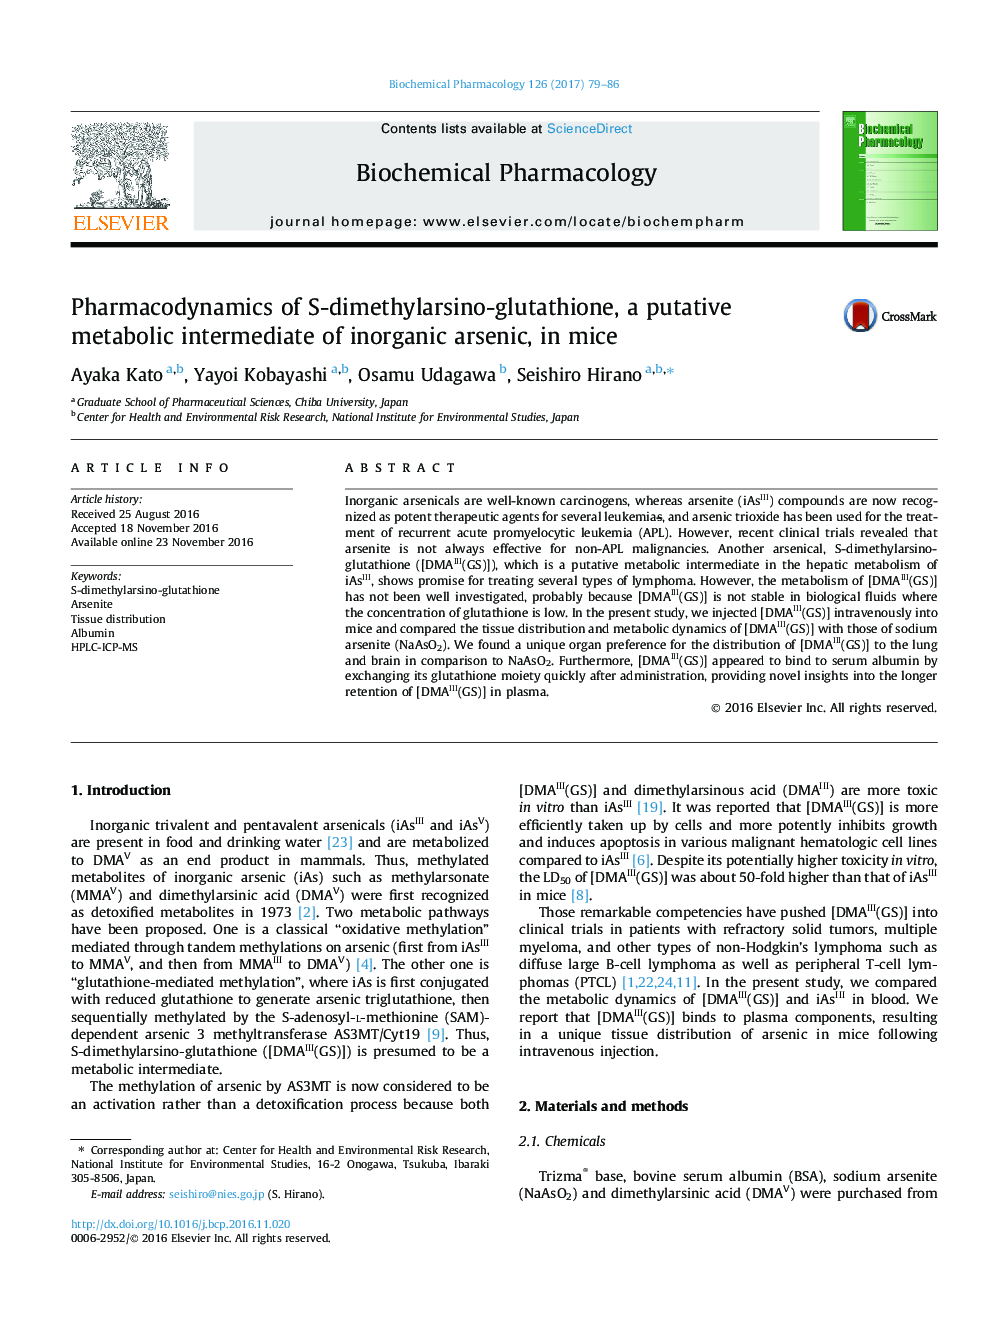 Pharmacodynamics of S-dimethylarsino-glutathione, a putative metabolic intermediate of inorganic arsenic, in mice